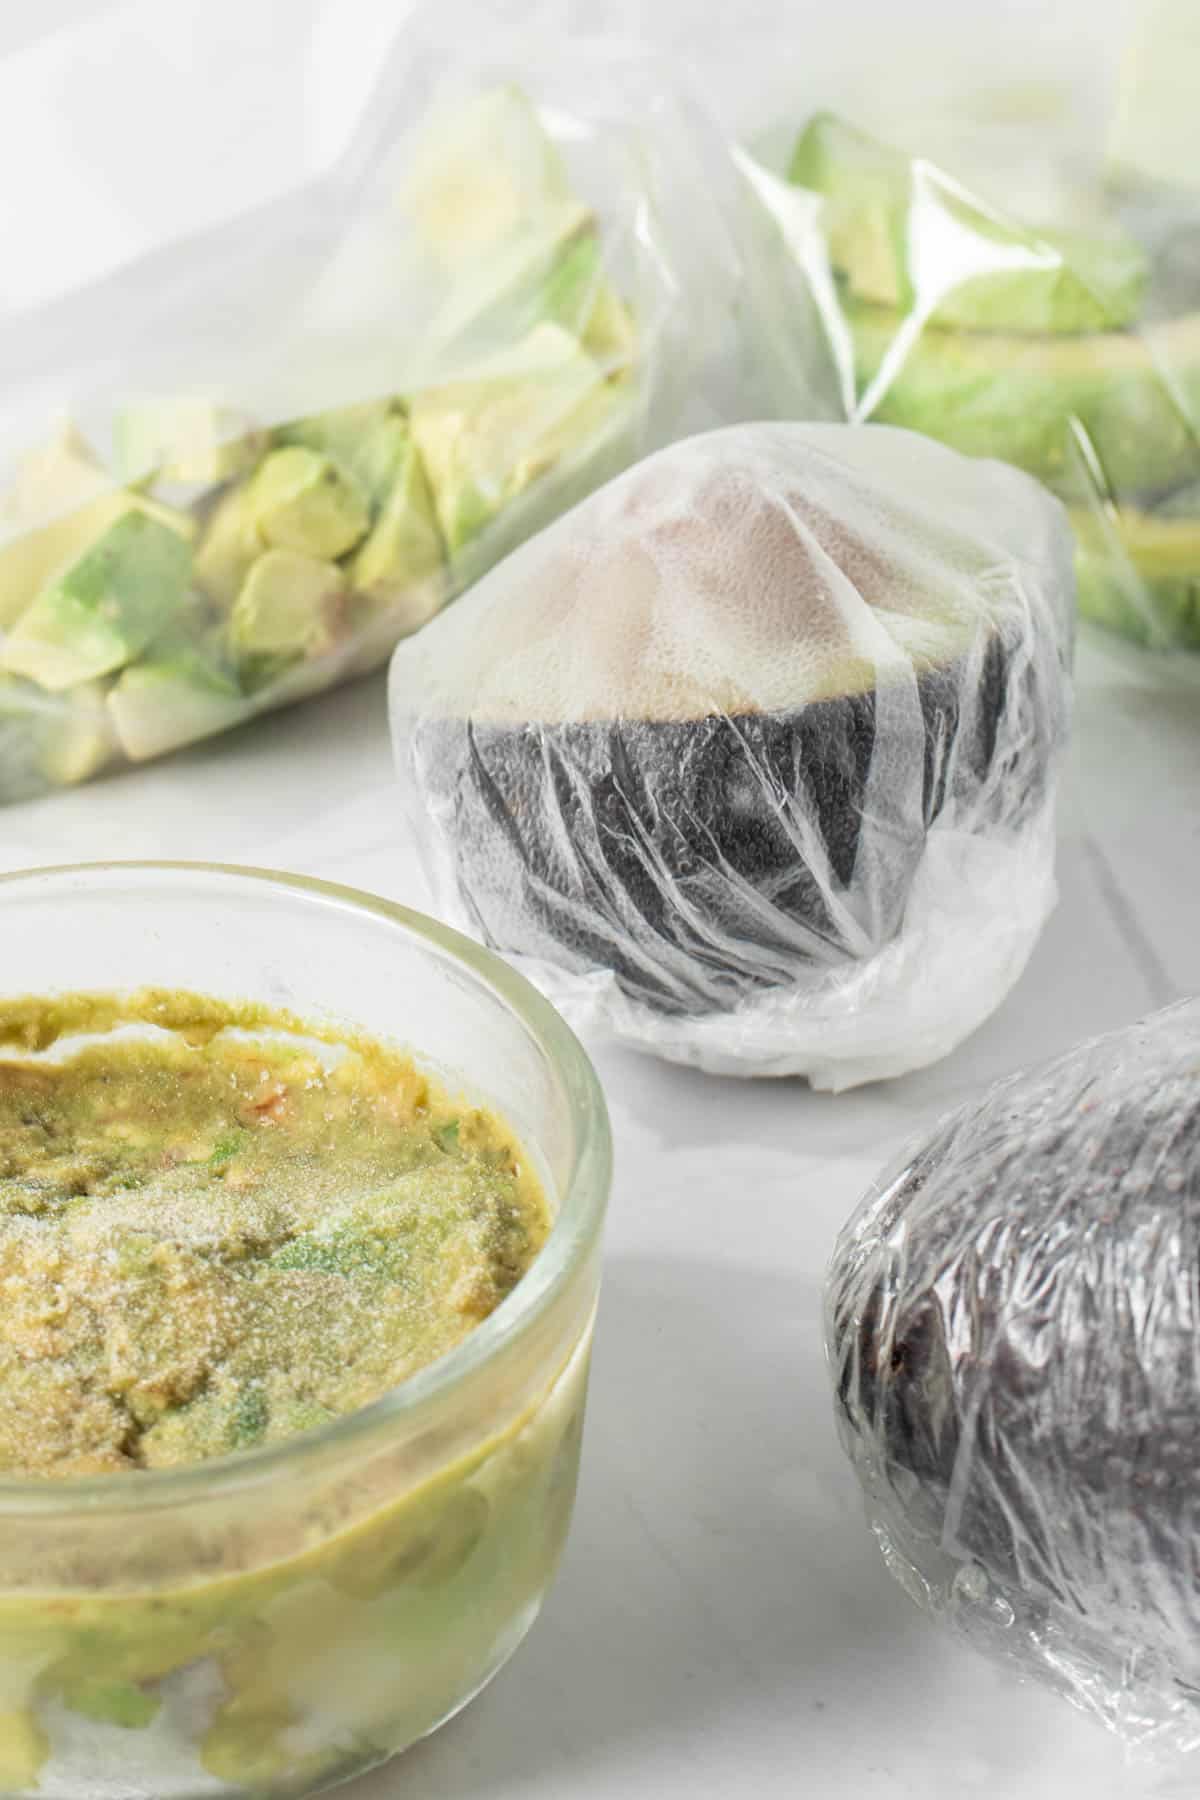 Image showing frozen avocados using various methods